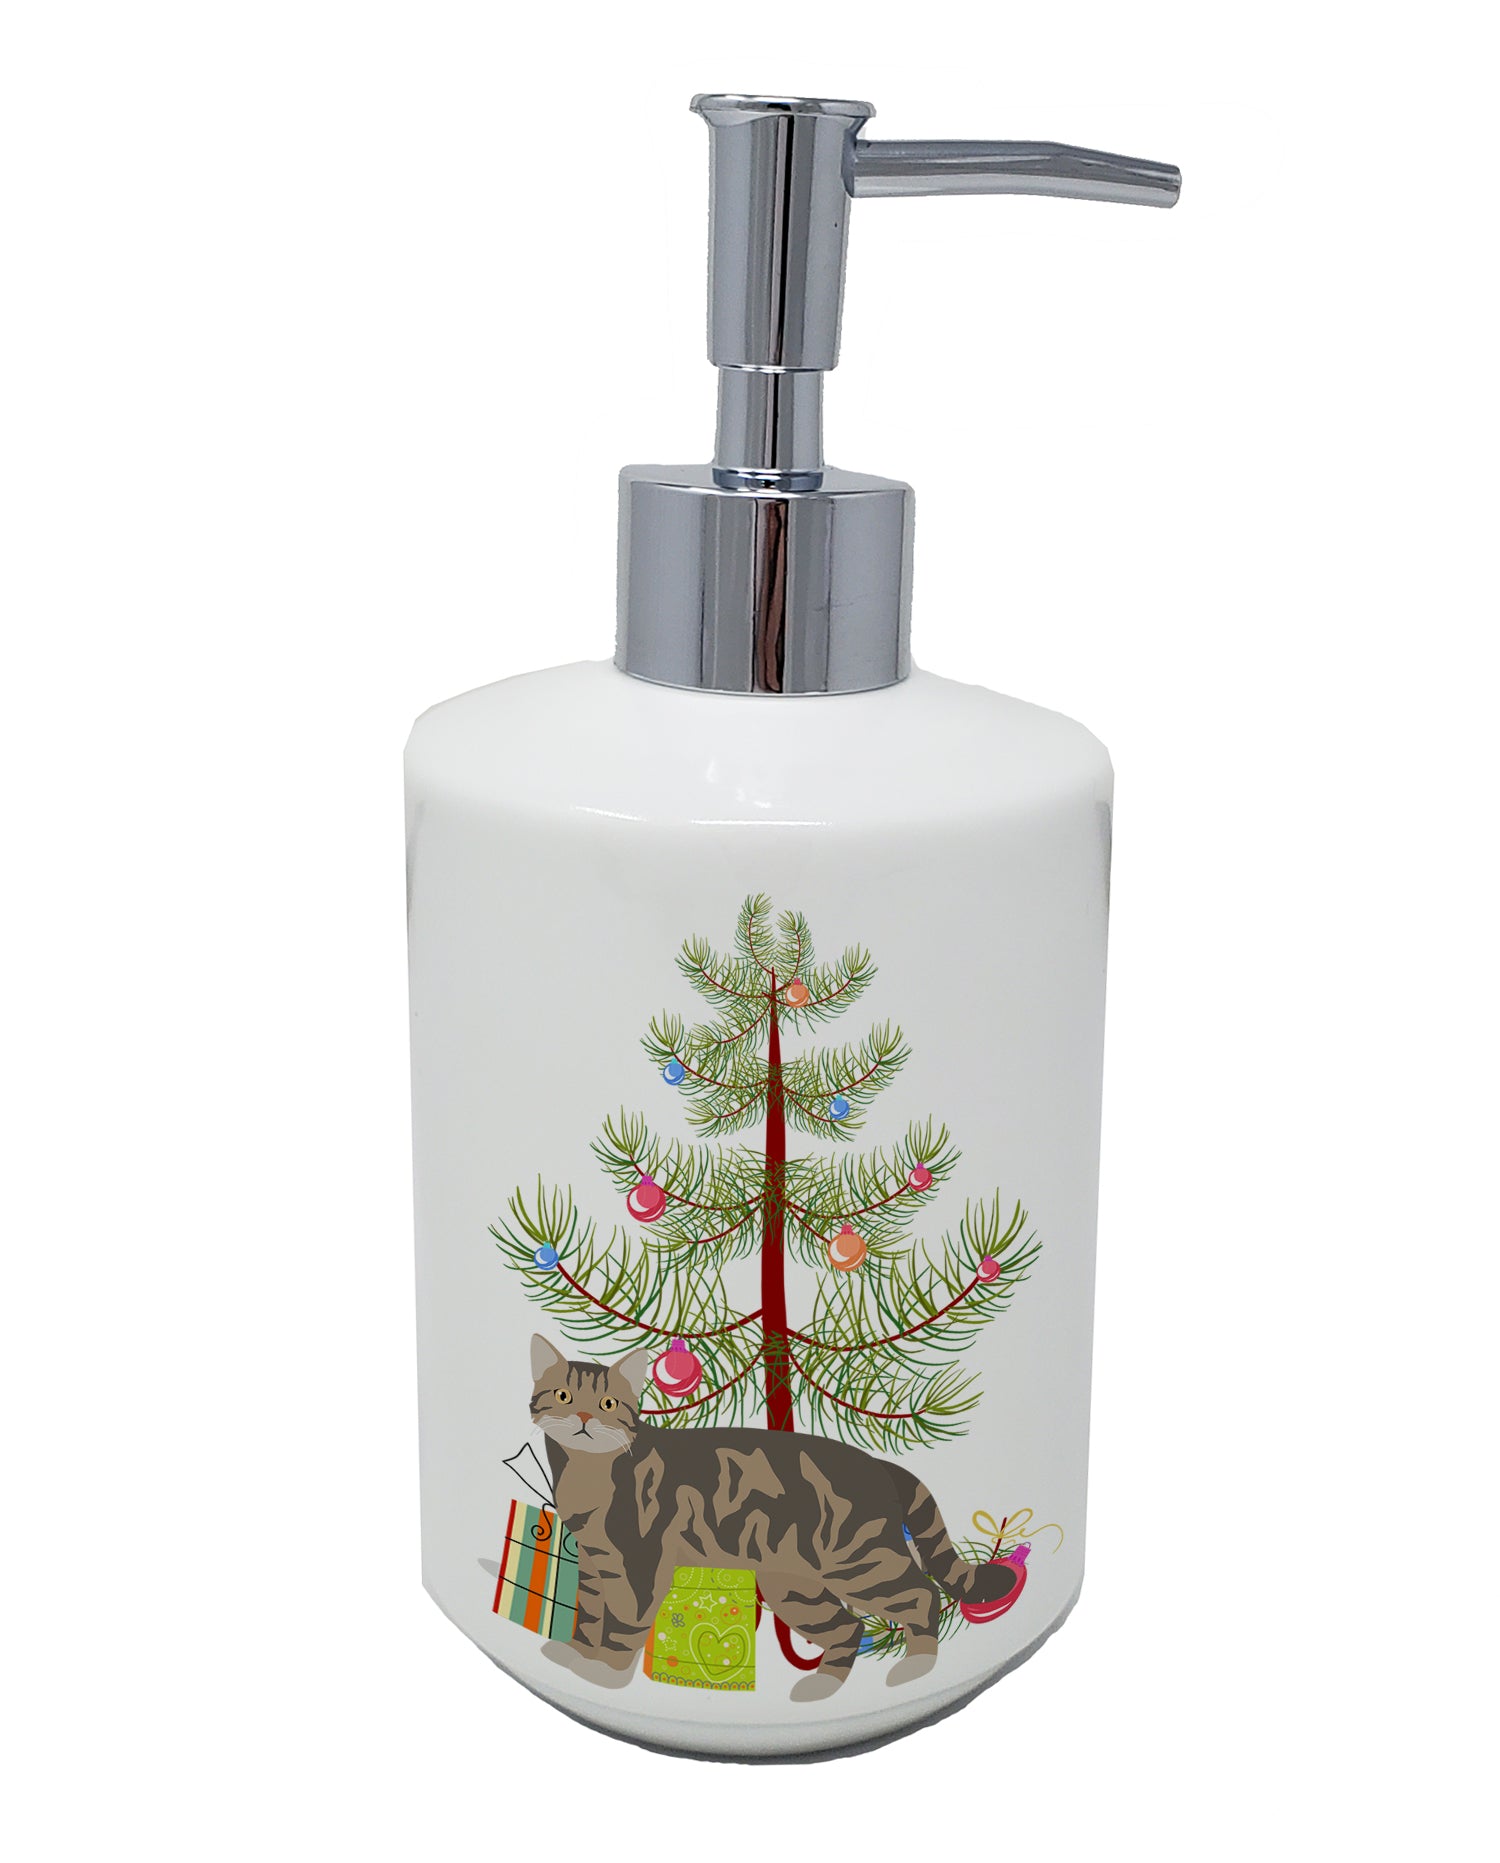 Buy this American Wirehair #1 Cat Merry Christmas Ceramic Soap Dispenser